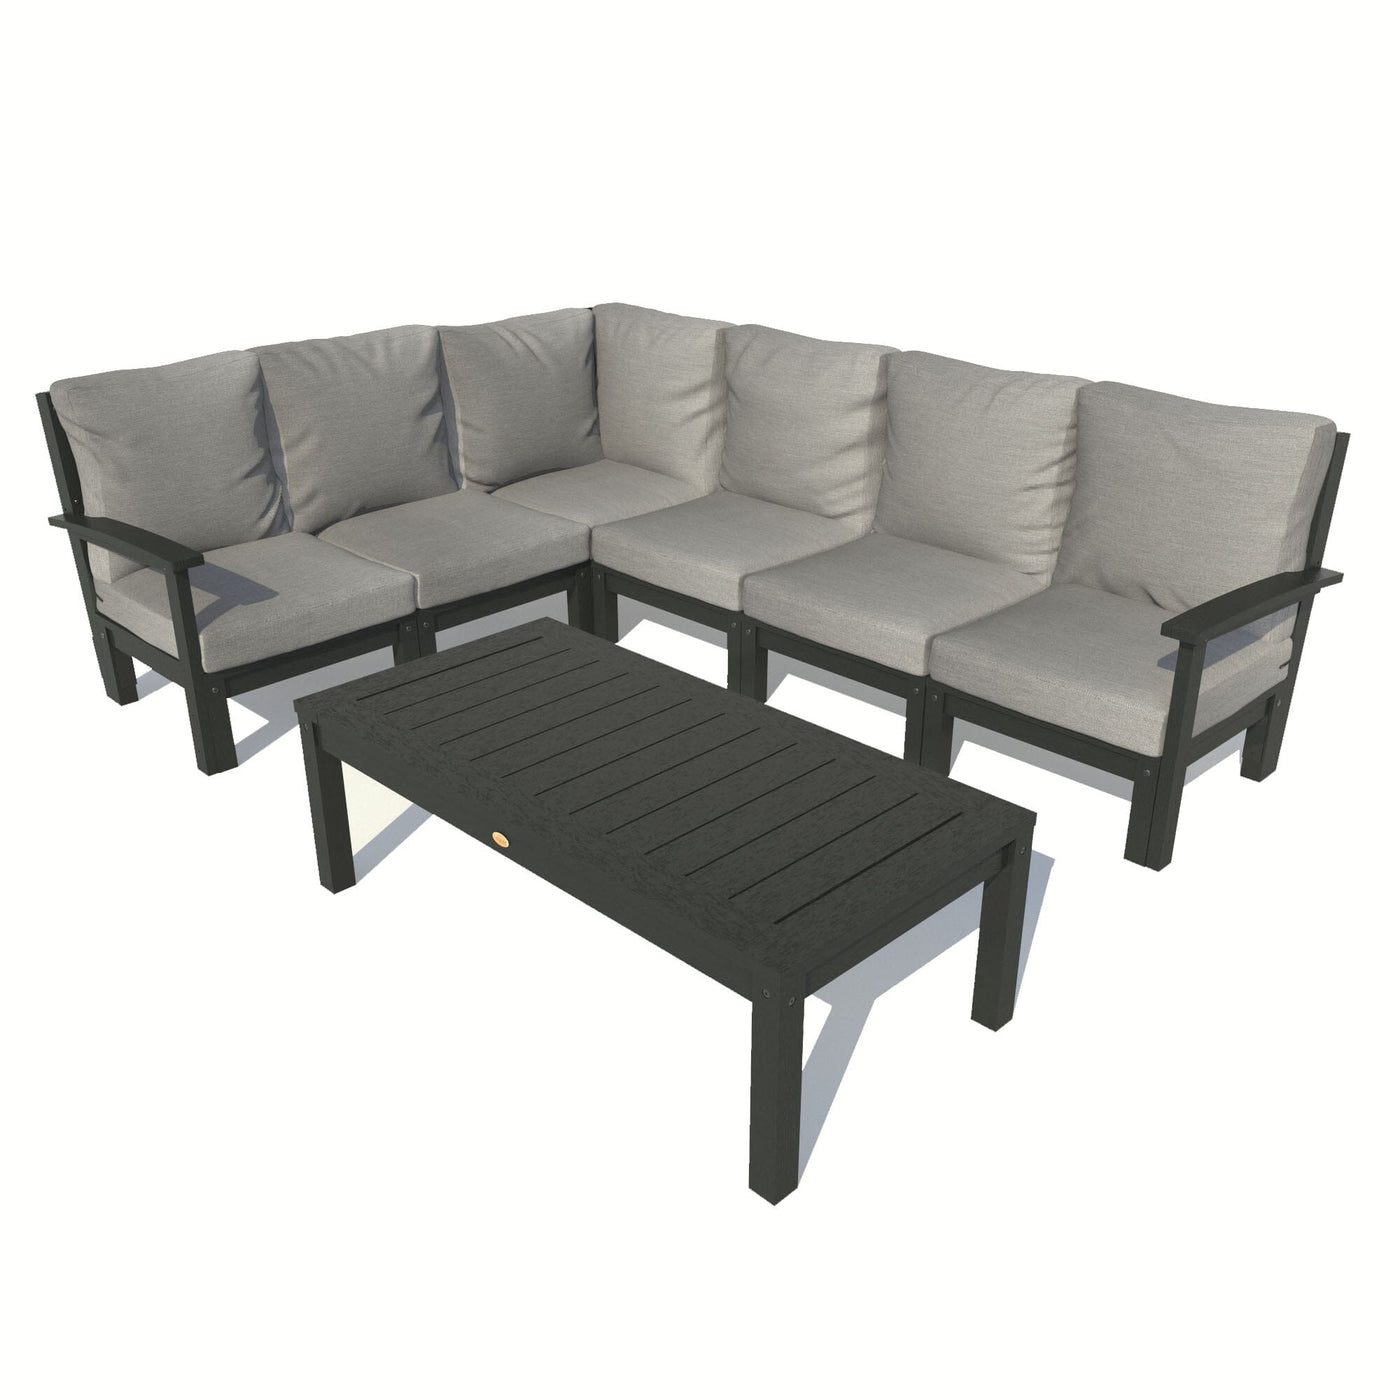 Bespoke Deep Seating: 7 Piece Sectional Sofa Set with Conversation Table Deep Seating Highwood USA Stone Gray Black 